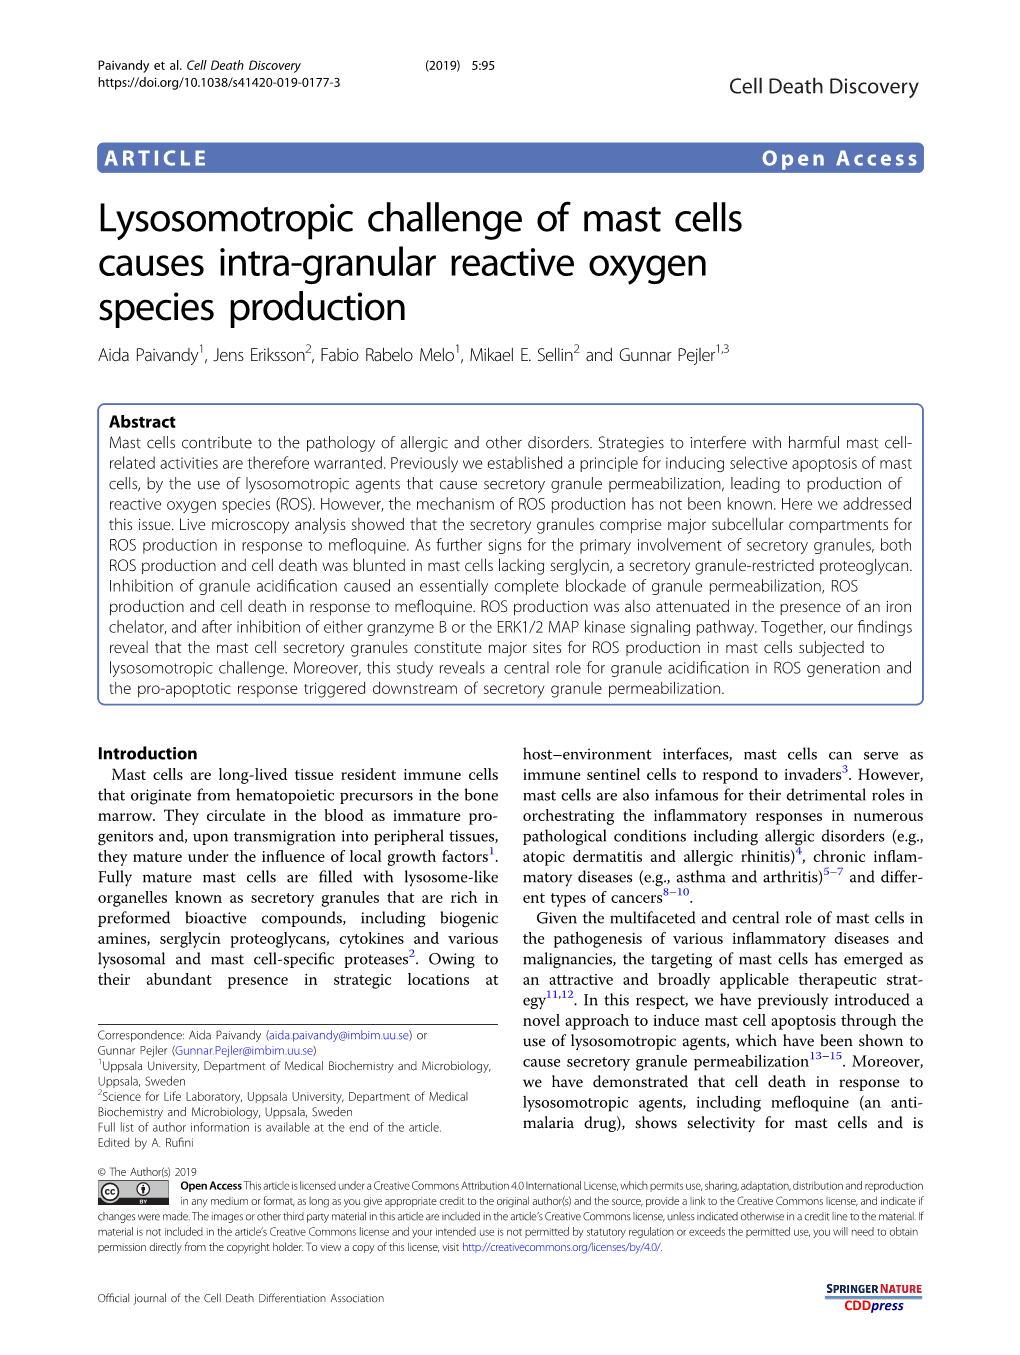 Lysosomotropic Challenge of Mast Cells Causes Intra-Granular Reactive Oxygen Species Production Aida Paivandy1,Jenseriksson2, Fabio Rabelo Melo1, Mikael E